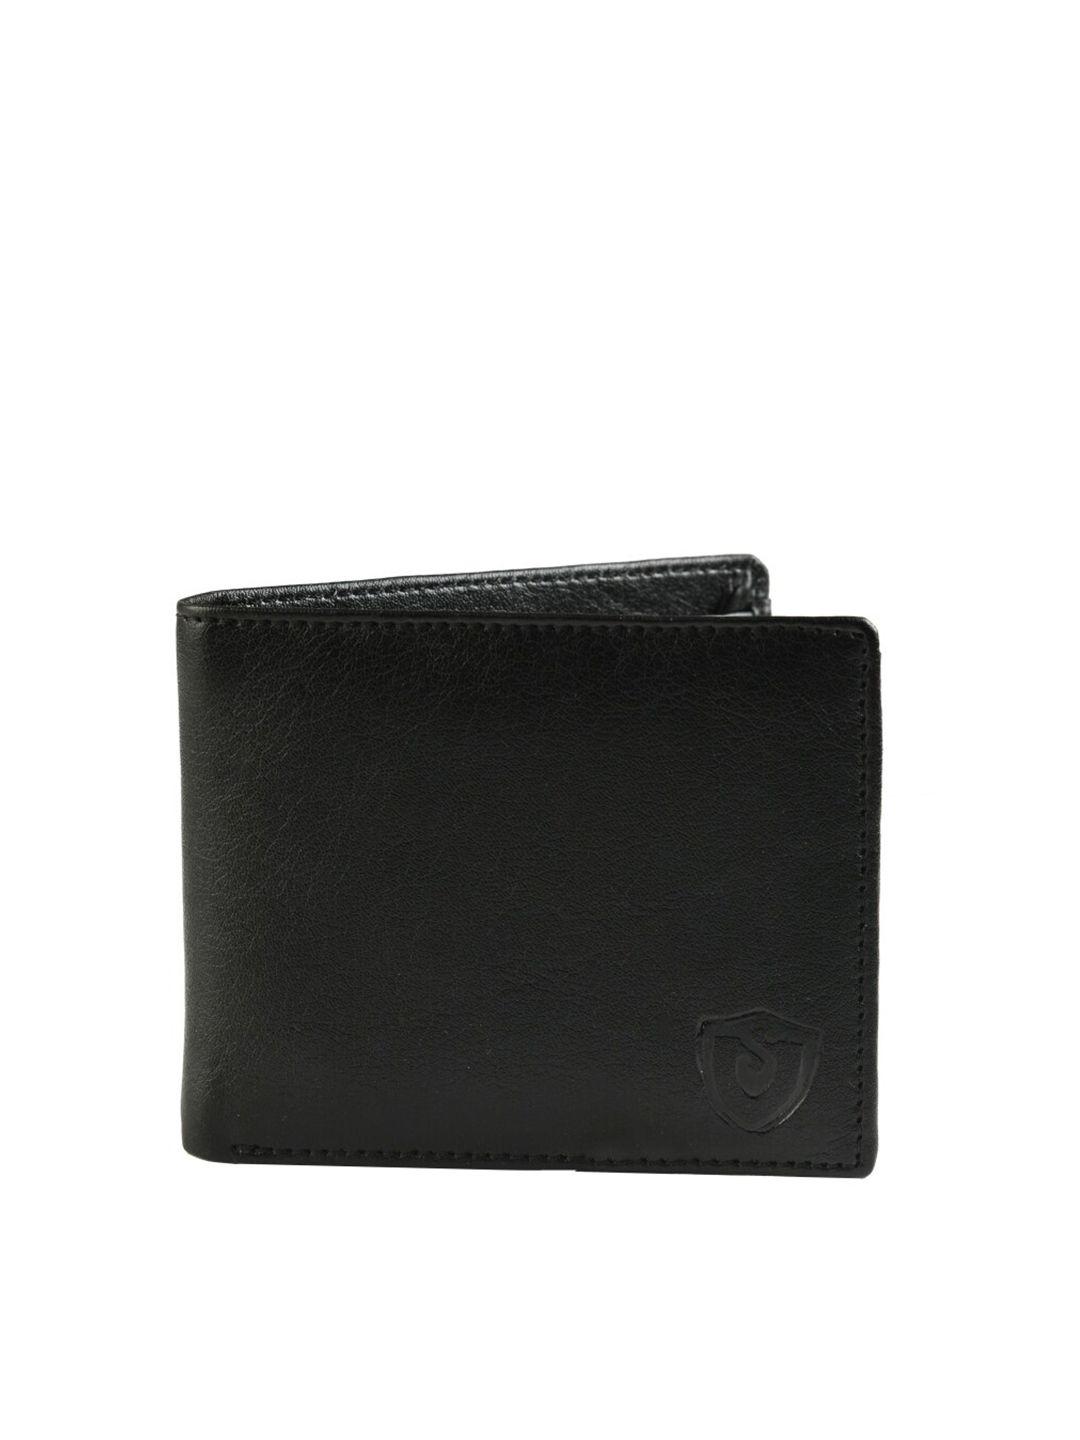 keviv men black leather two fold wallet